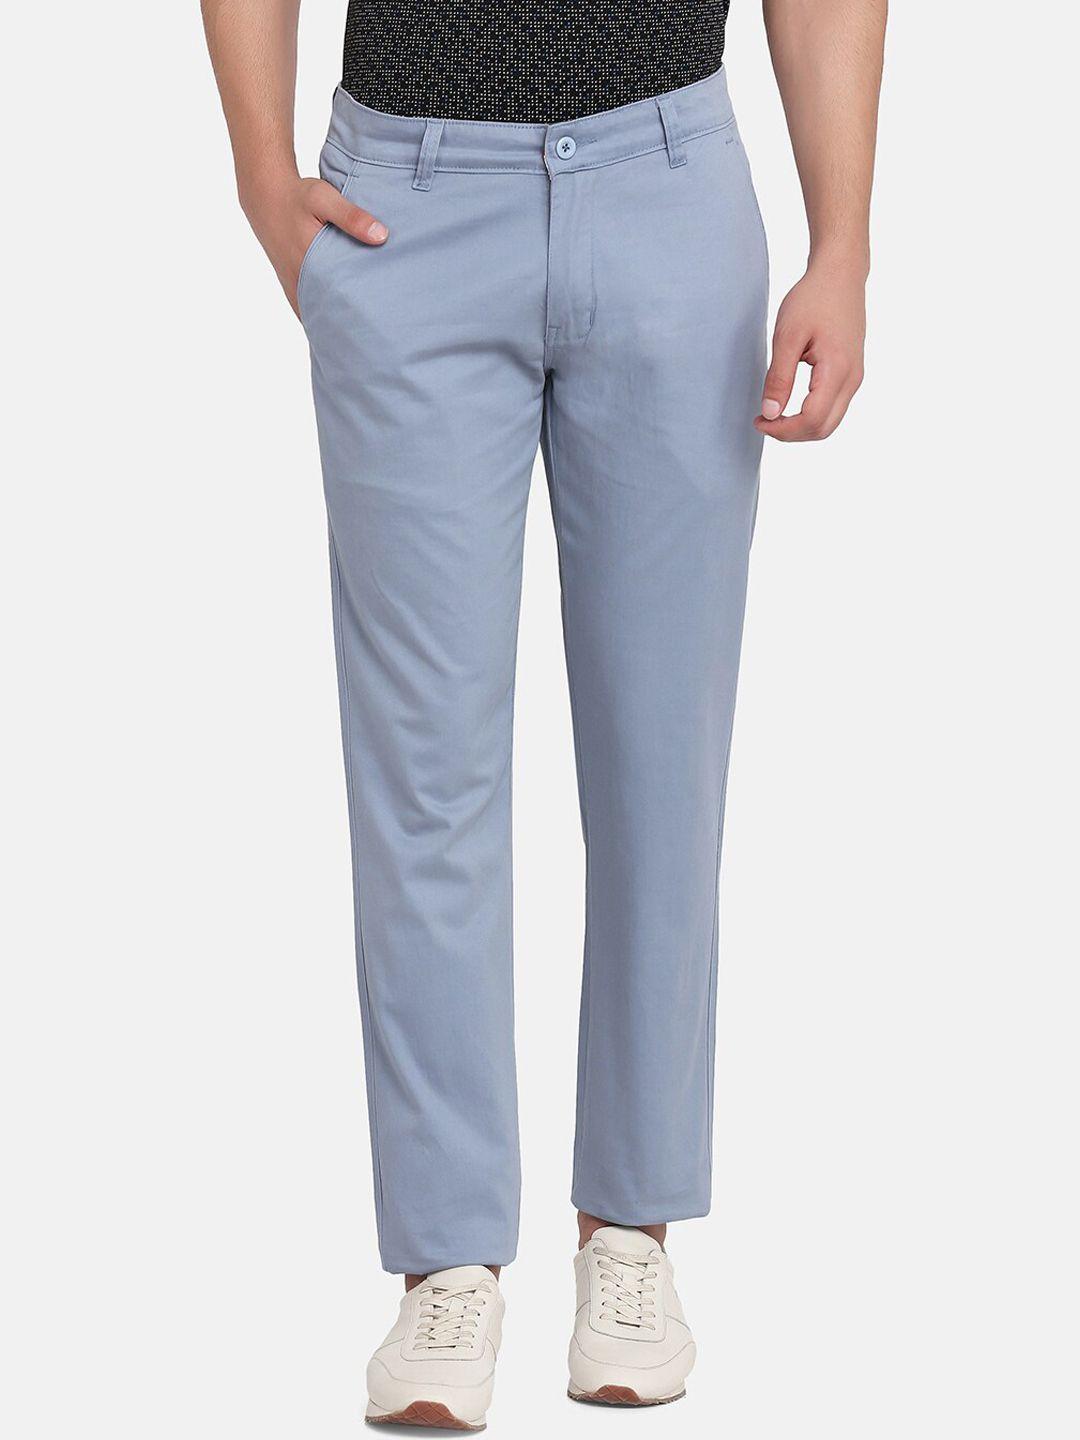 tahvo-men-blue-comfort-chinos-trousers